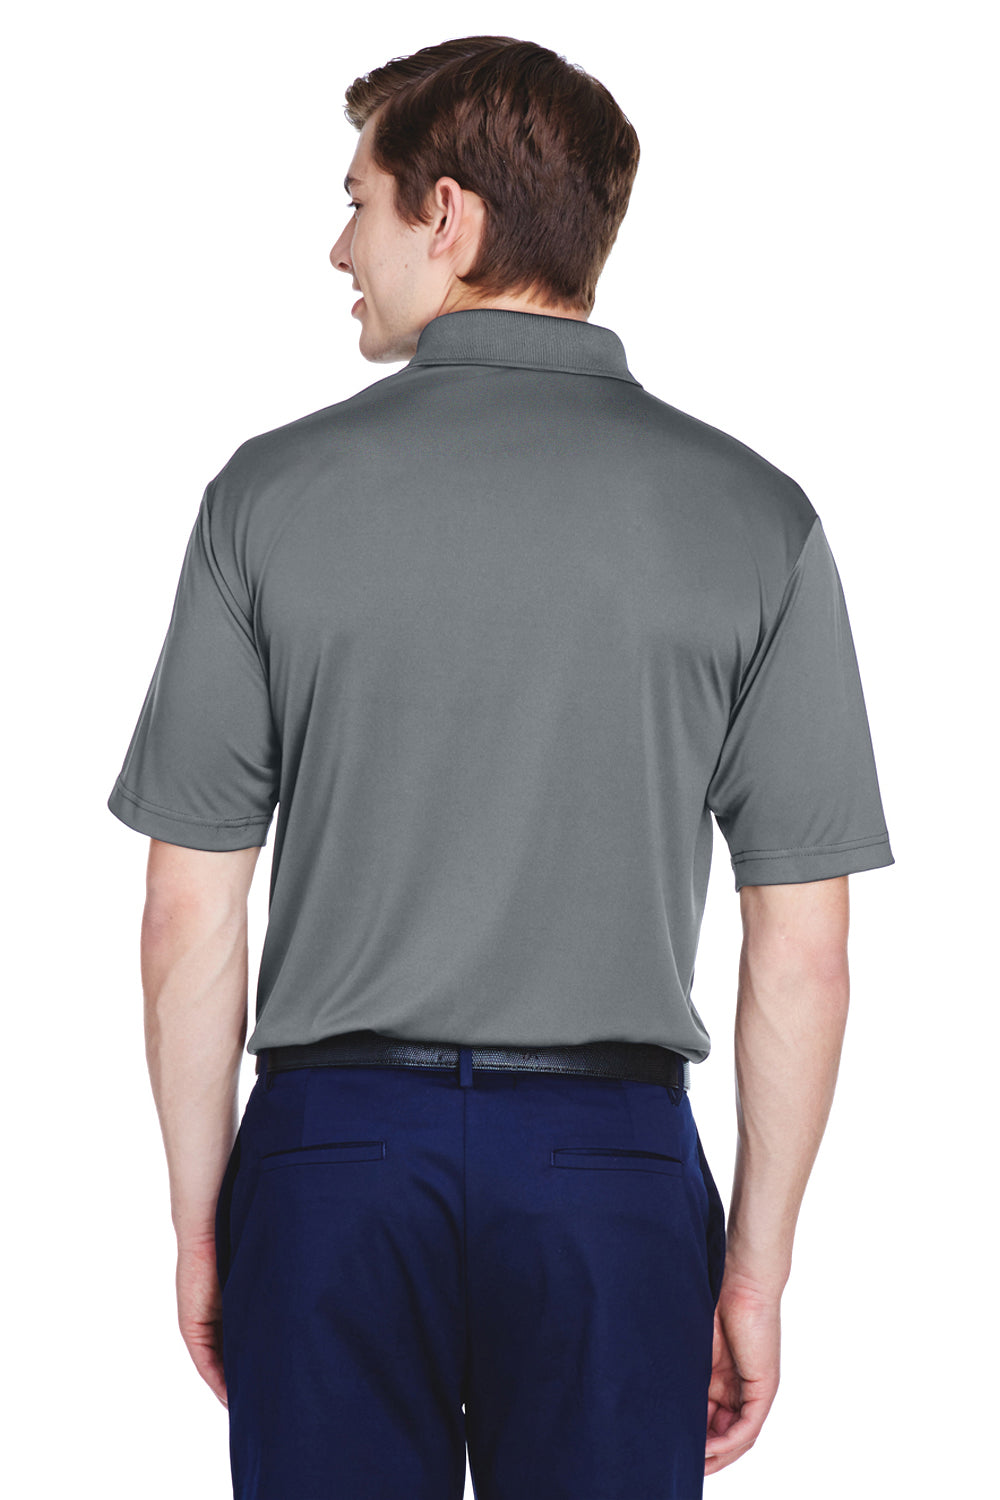 UltraClub 8610 Mens Cool & Dry 8 Star Elite Performance Moisture Wicking Short Sleeve Polo Shirt Charcoal Grey Back